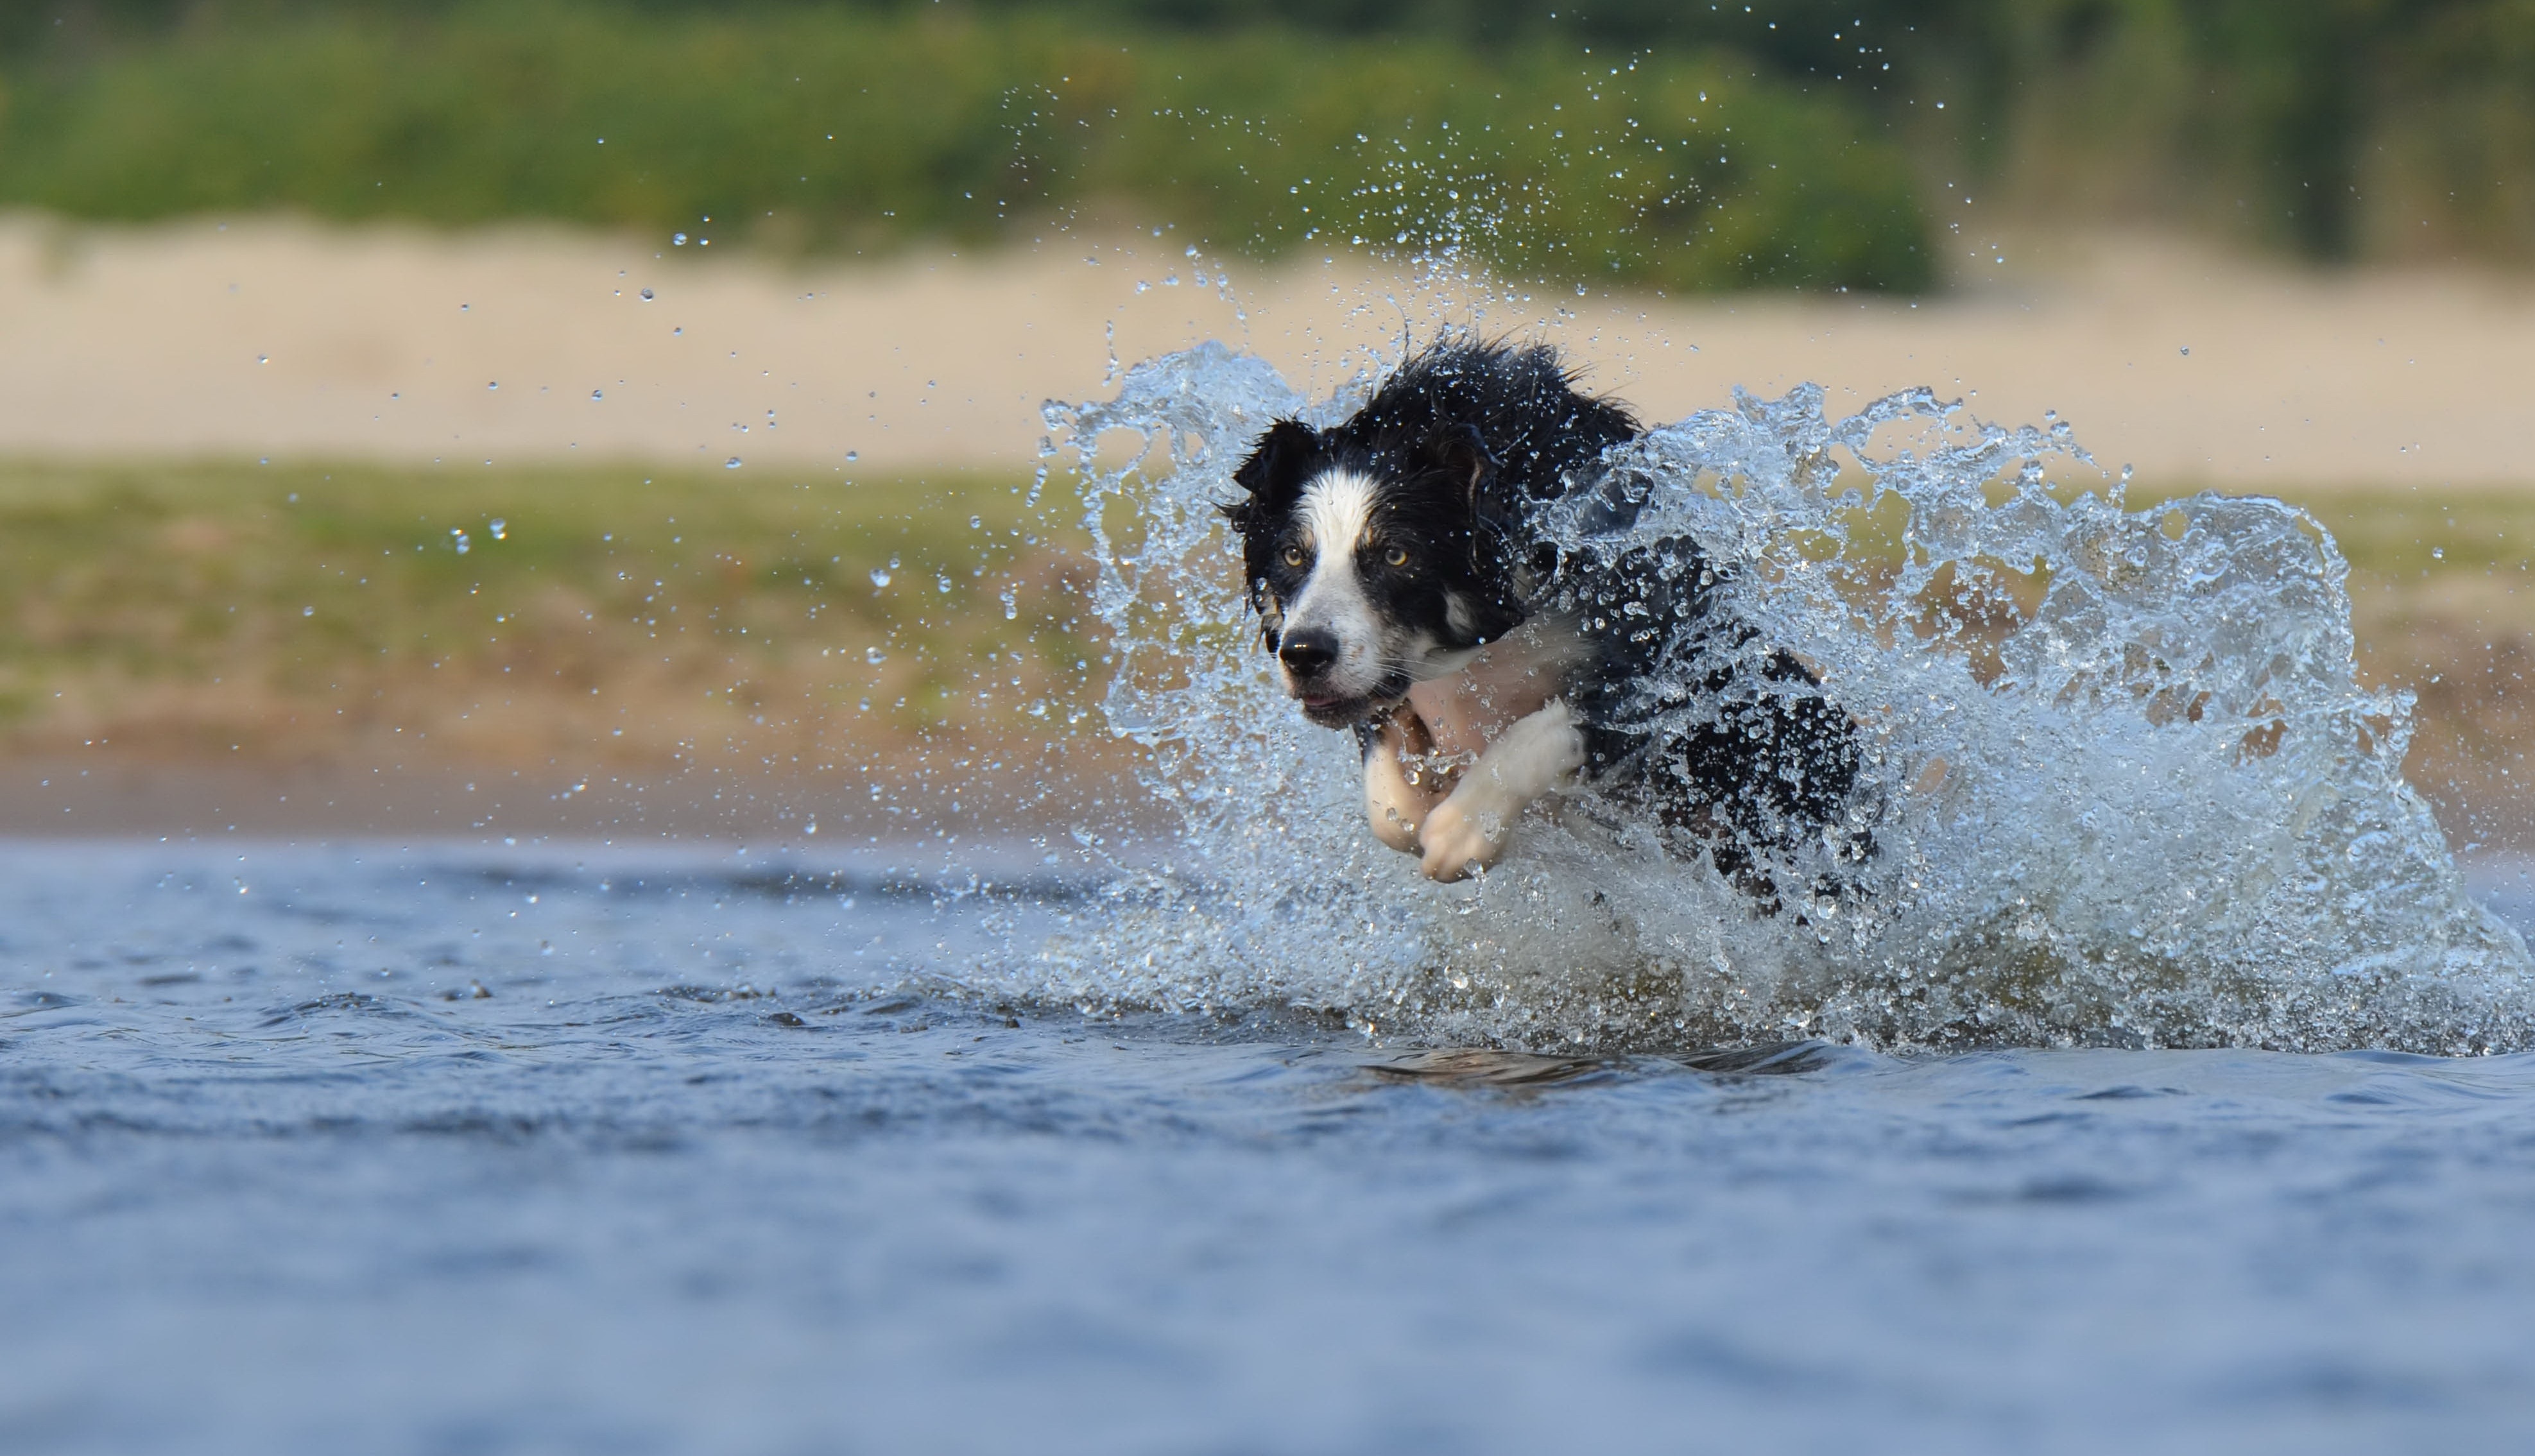 Jump, Border Collie, Water, dog, one animal